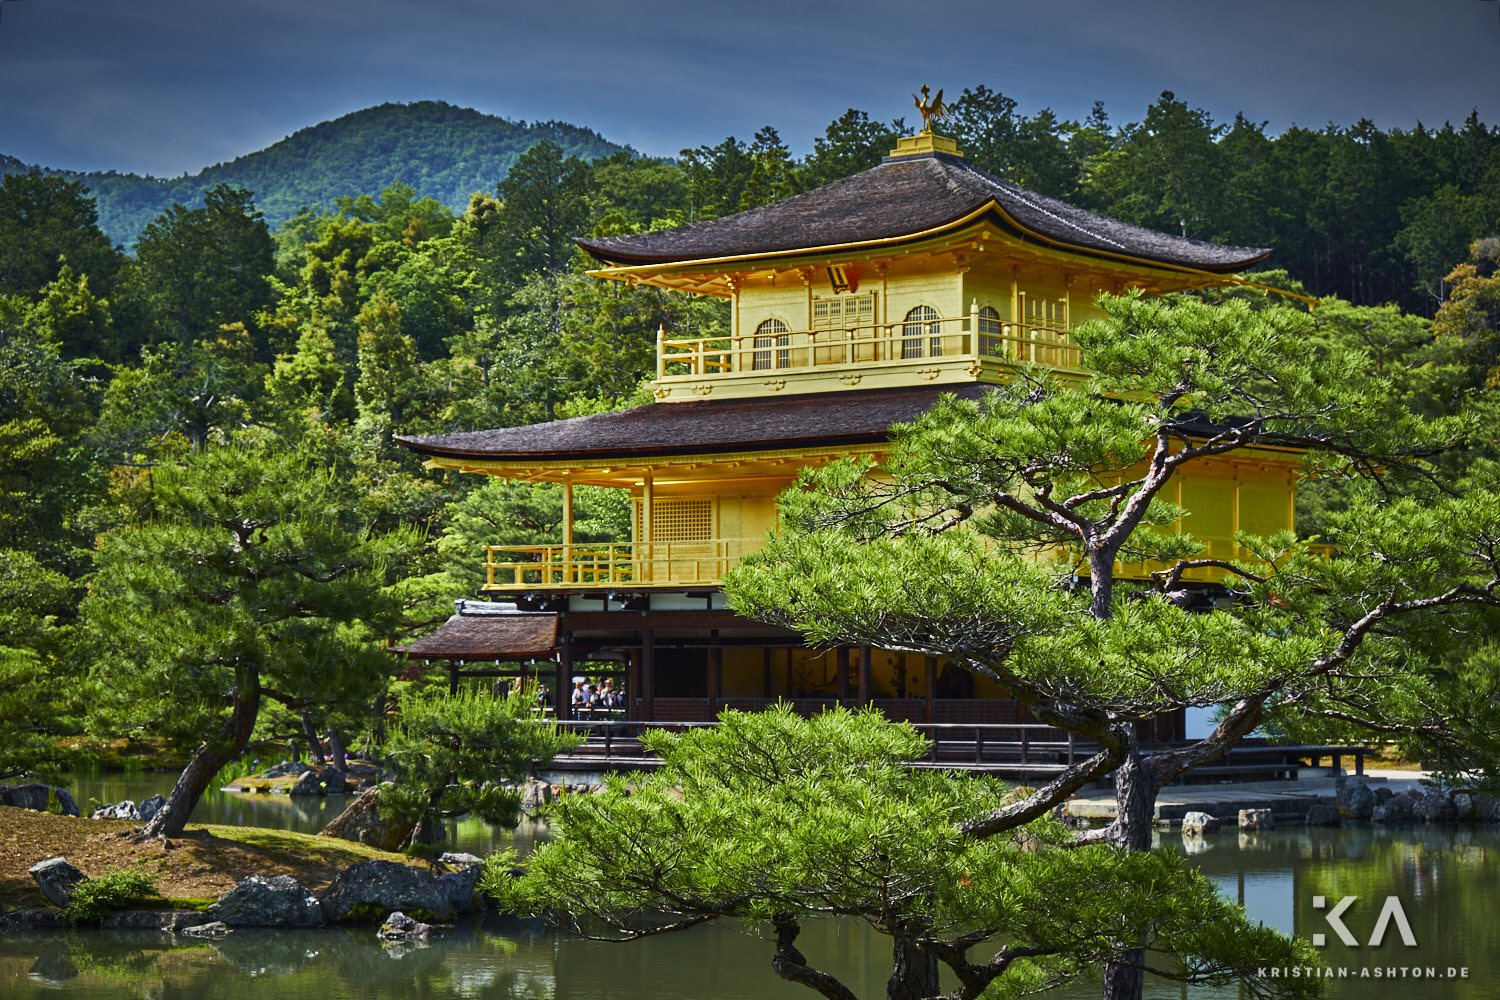 Rokuon-ji temple and the Golden Pavilion Kinkaku